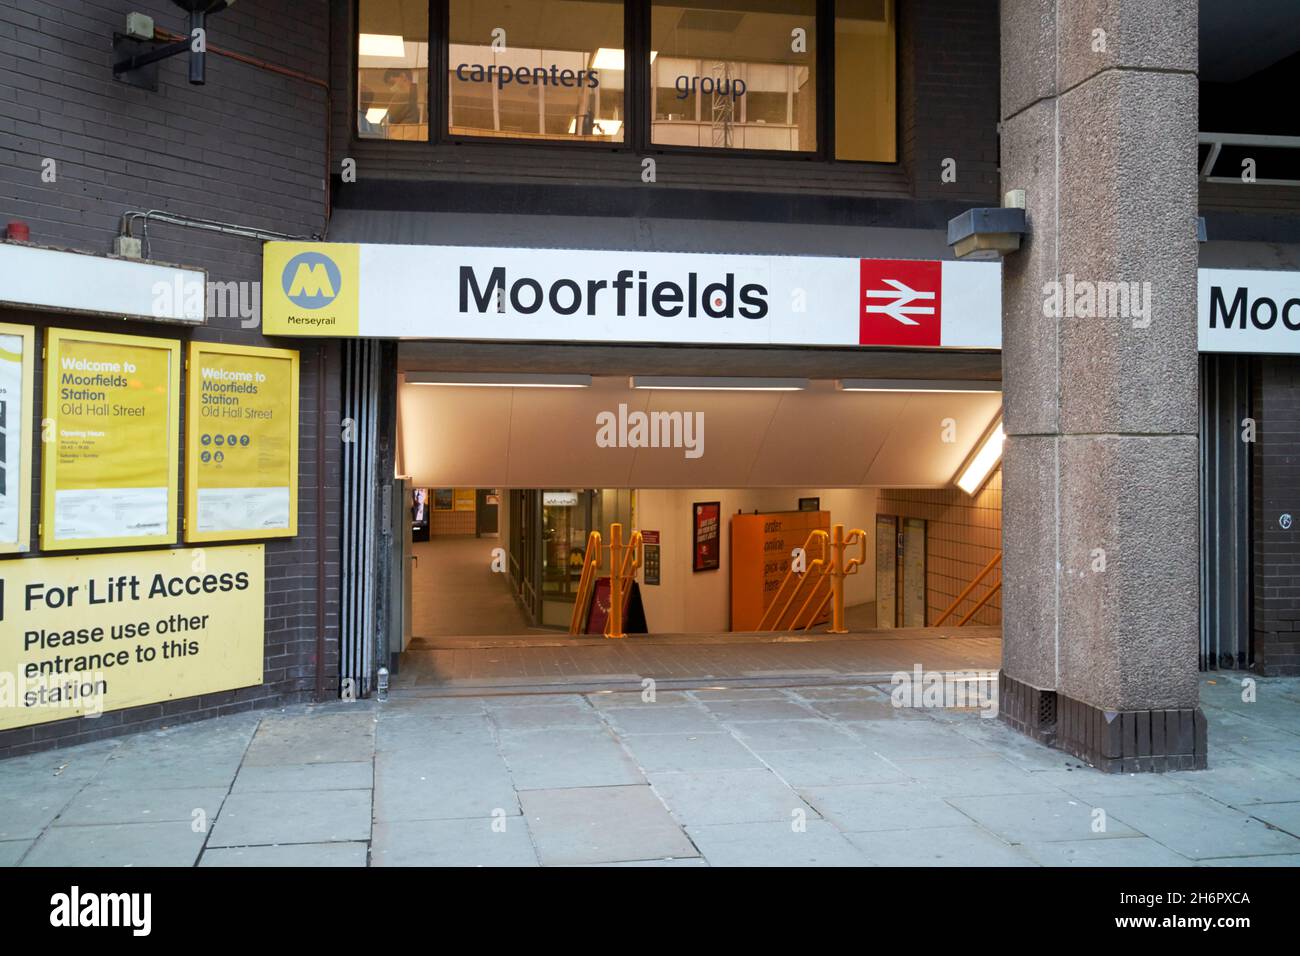 entrance to moorfields merseyrail train station Liverpool merseyside uk Stock Photo